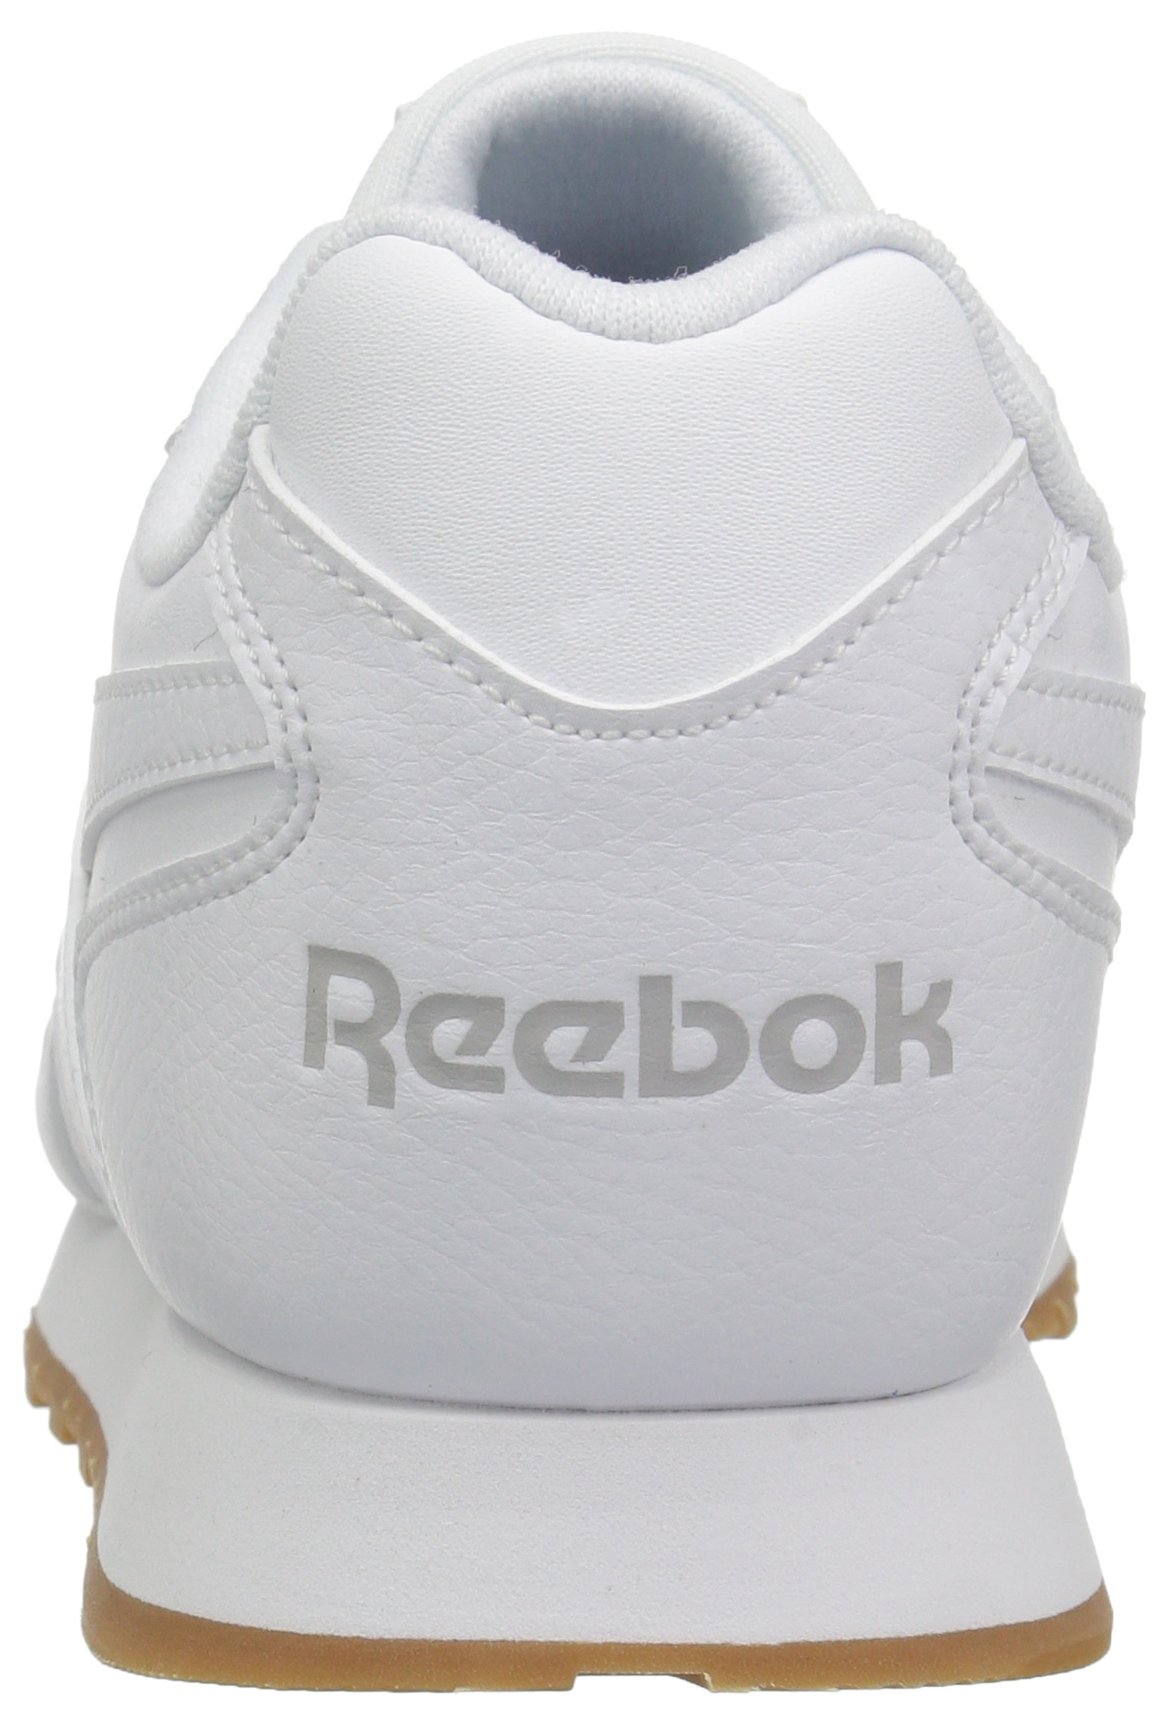 Reebok Women Classic Harman Run Sneaker, White/Gum, 5.5